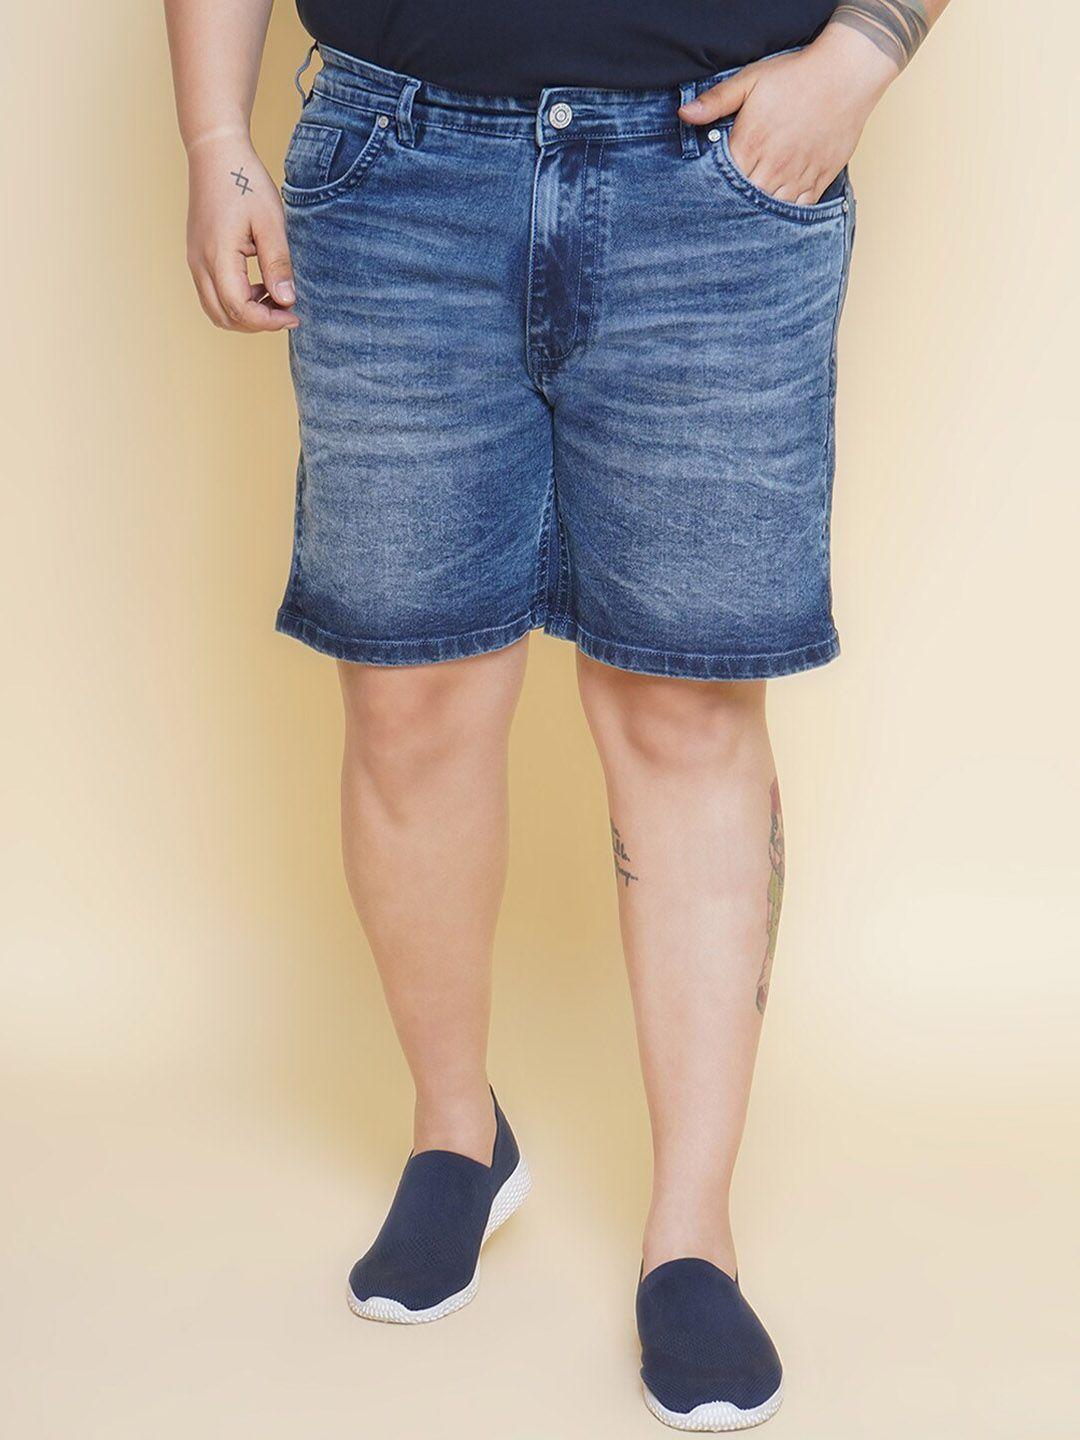 john-pride-men-plus-size-washed-mid-rie-denim-shorts